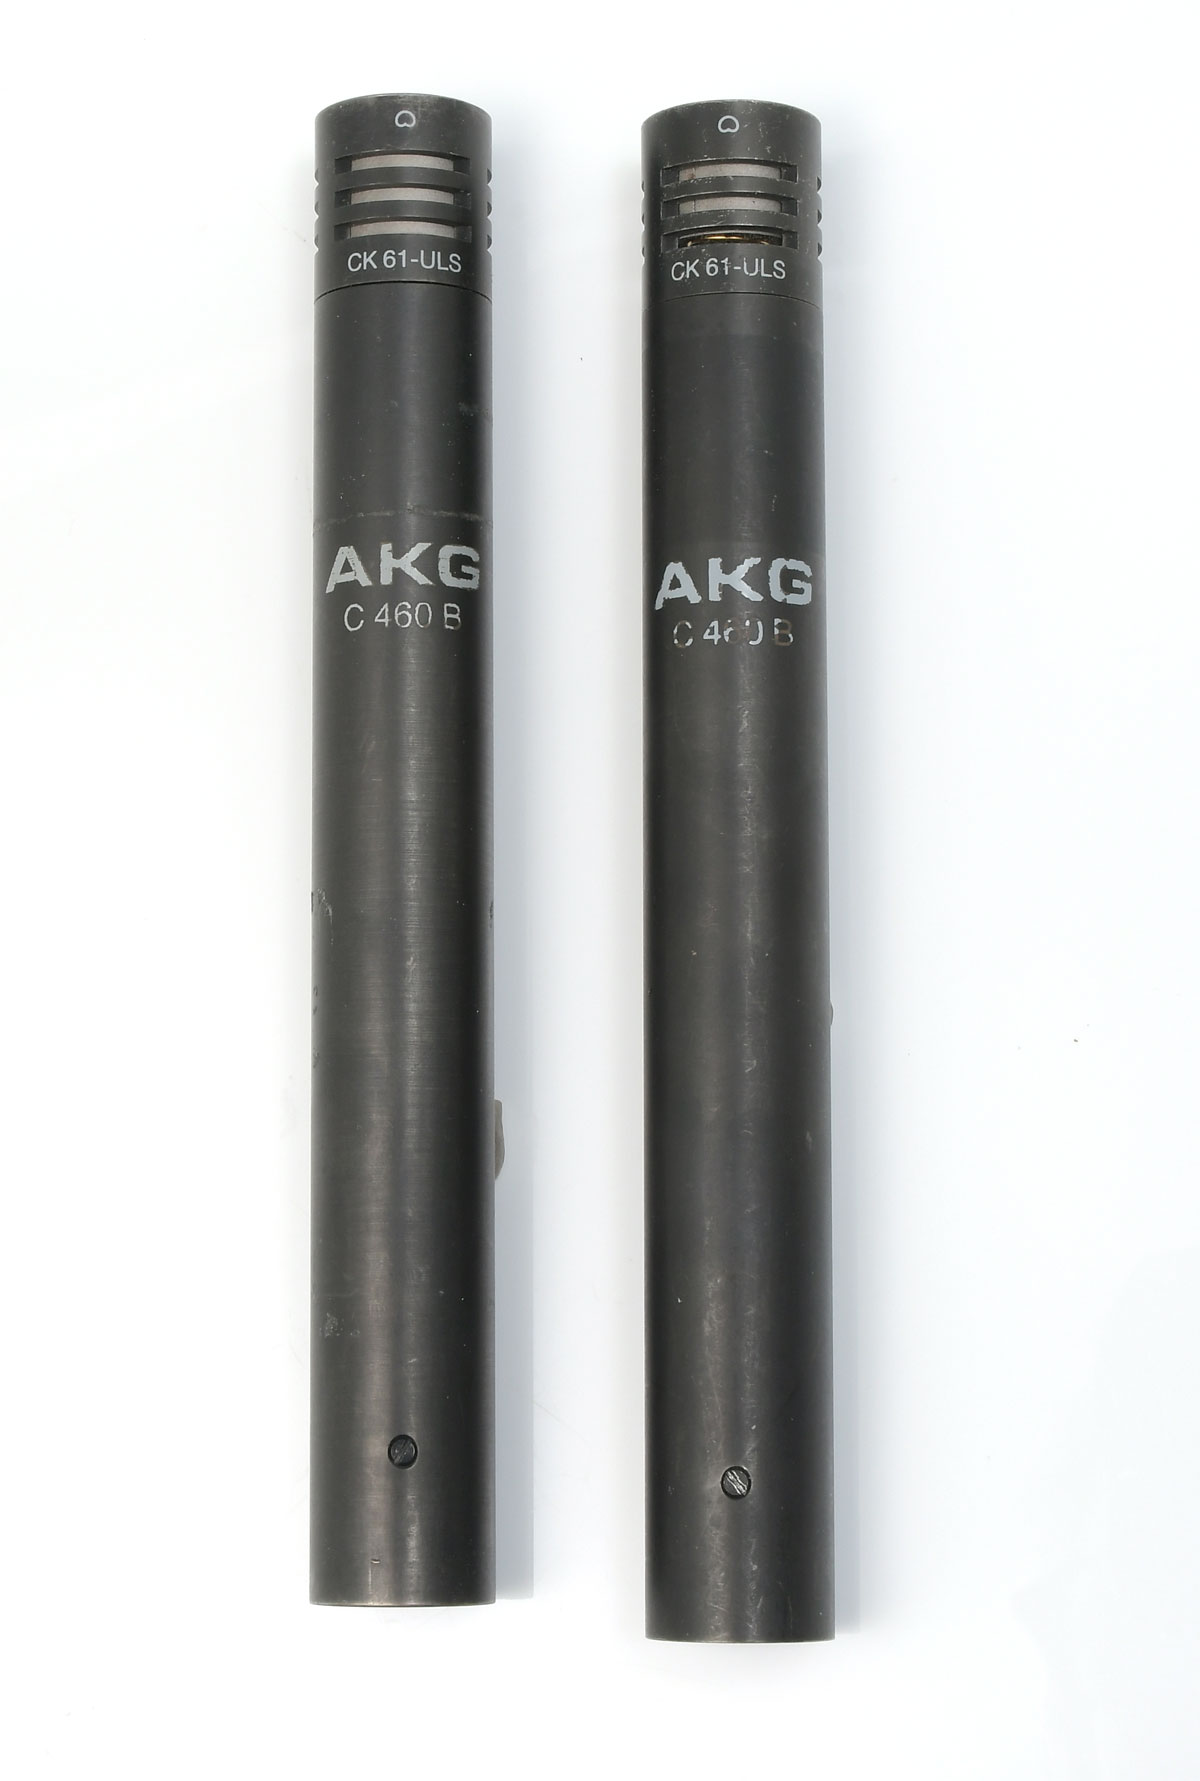 2 PC AKG C 460 B MICROPHONES  275176